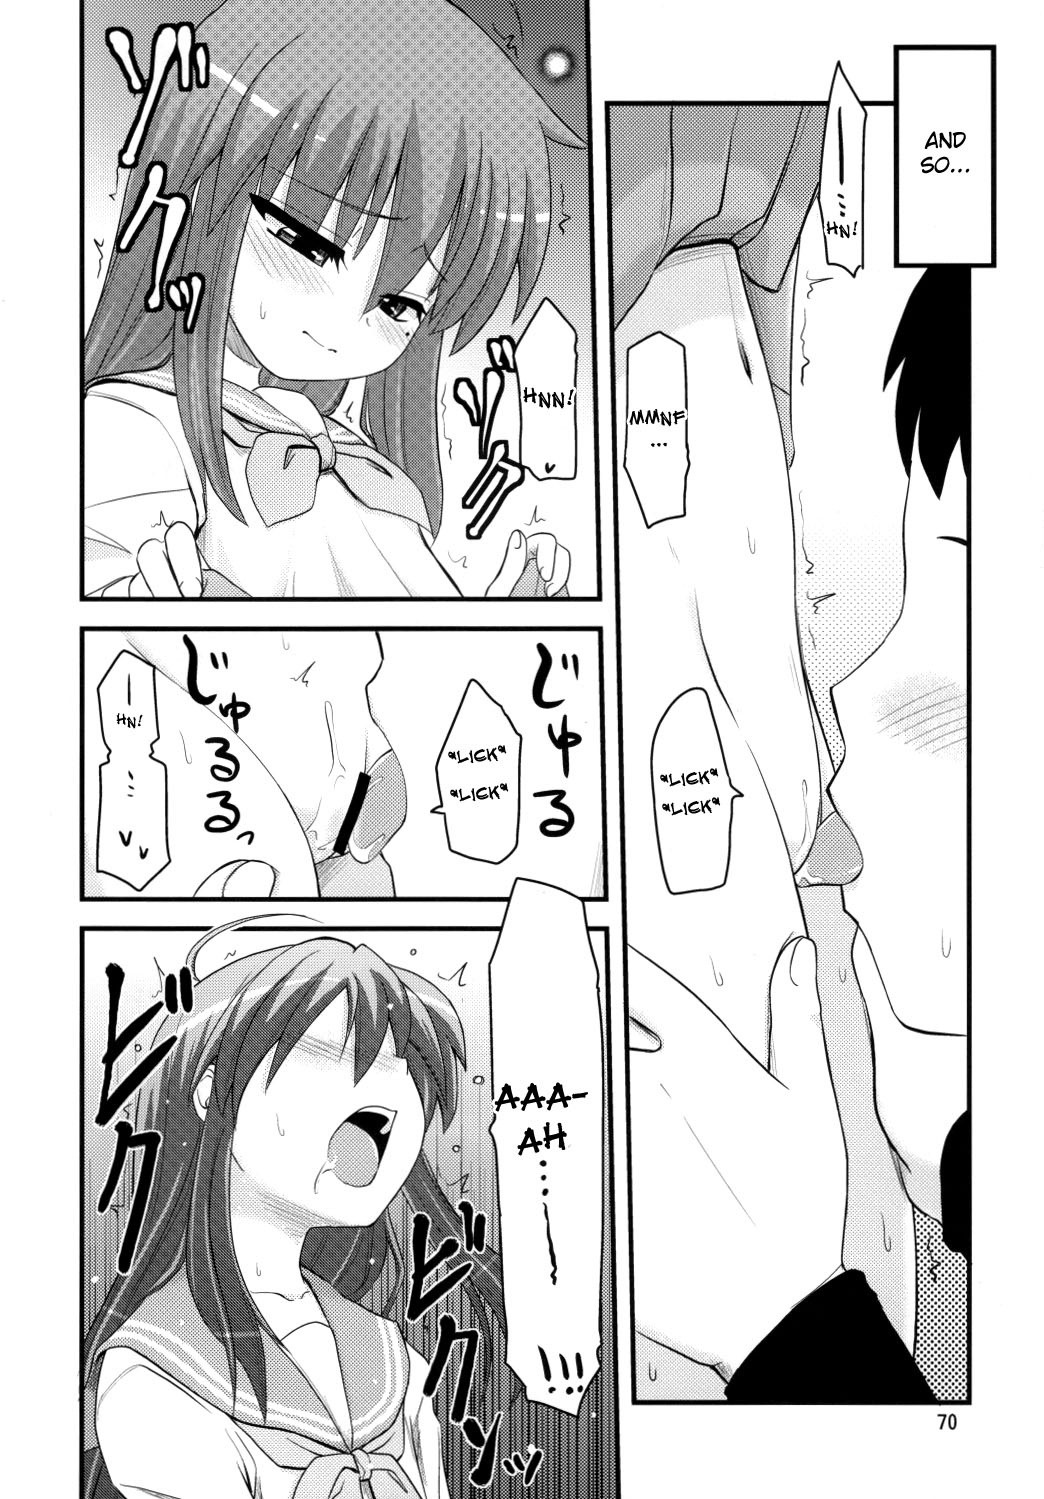 Konata and Oh-zu 4 people each and every one + 1 hentai manga picture 66